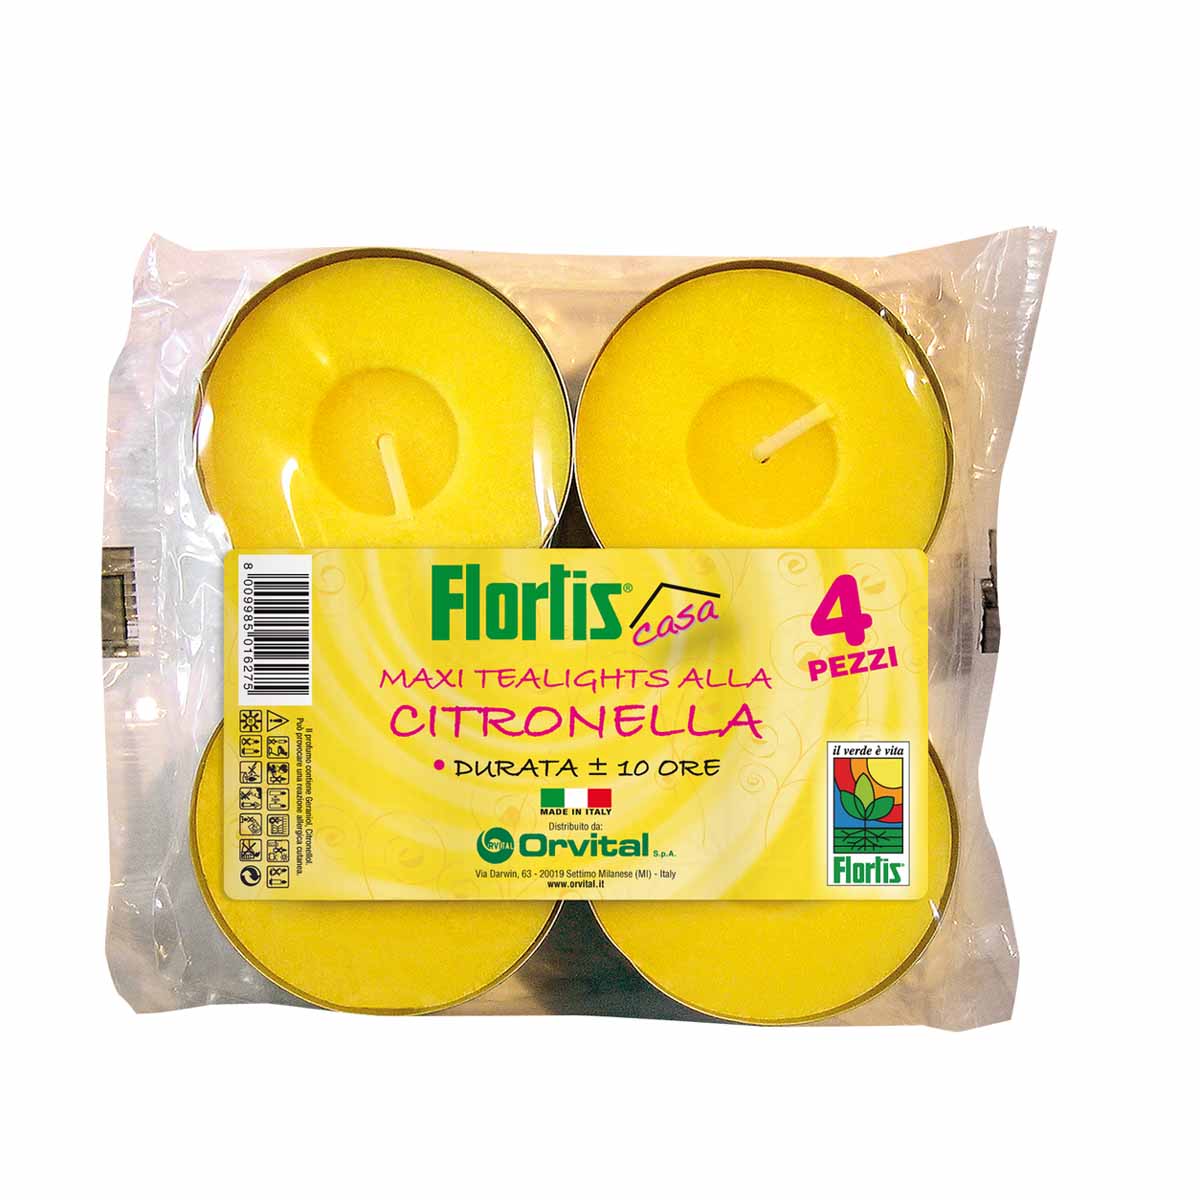 Flortis 4 Maxi tealights alla citronella